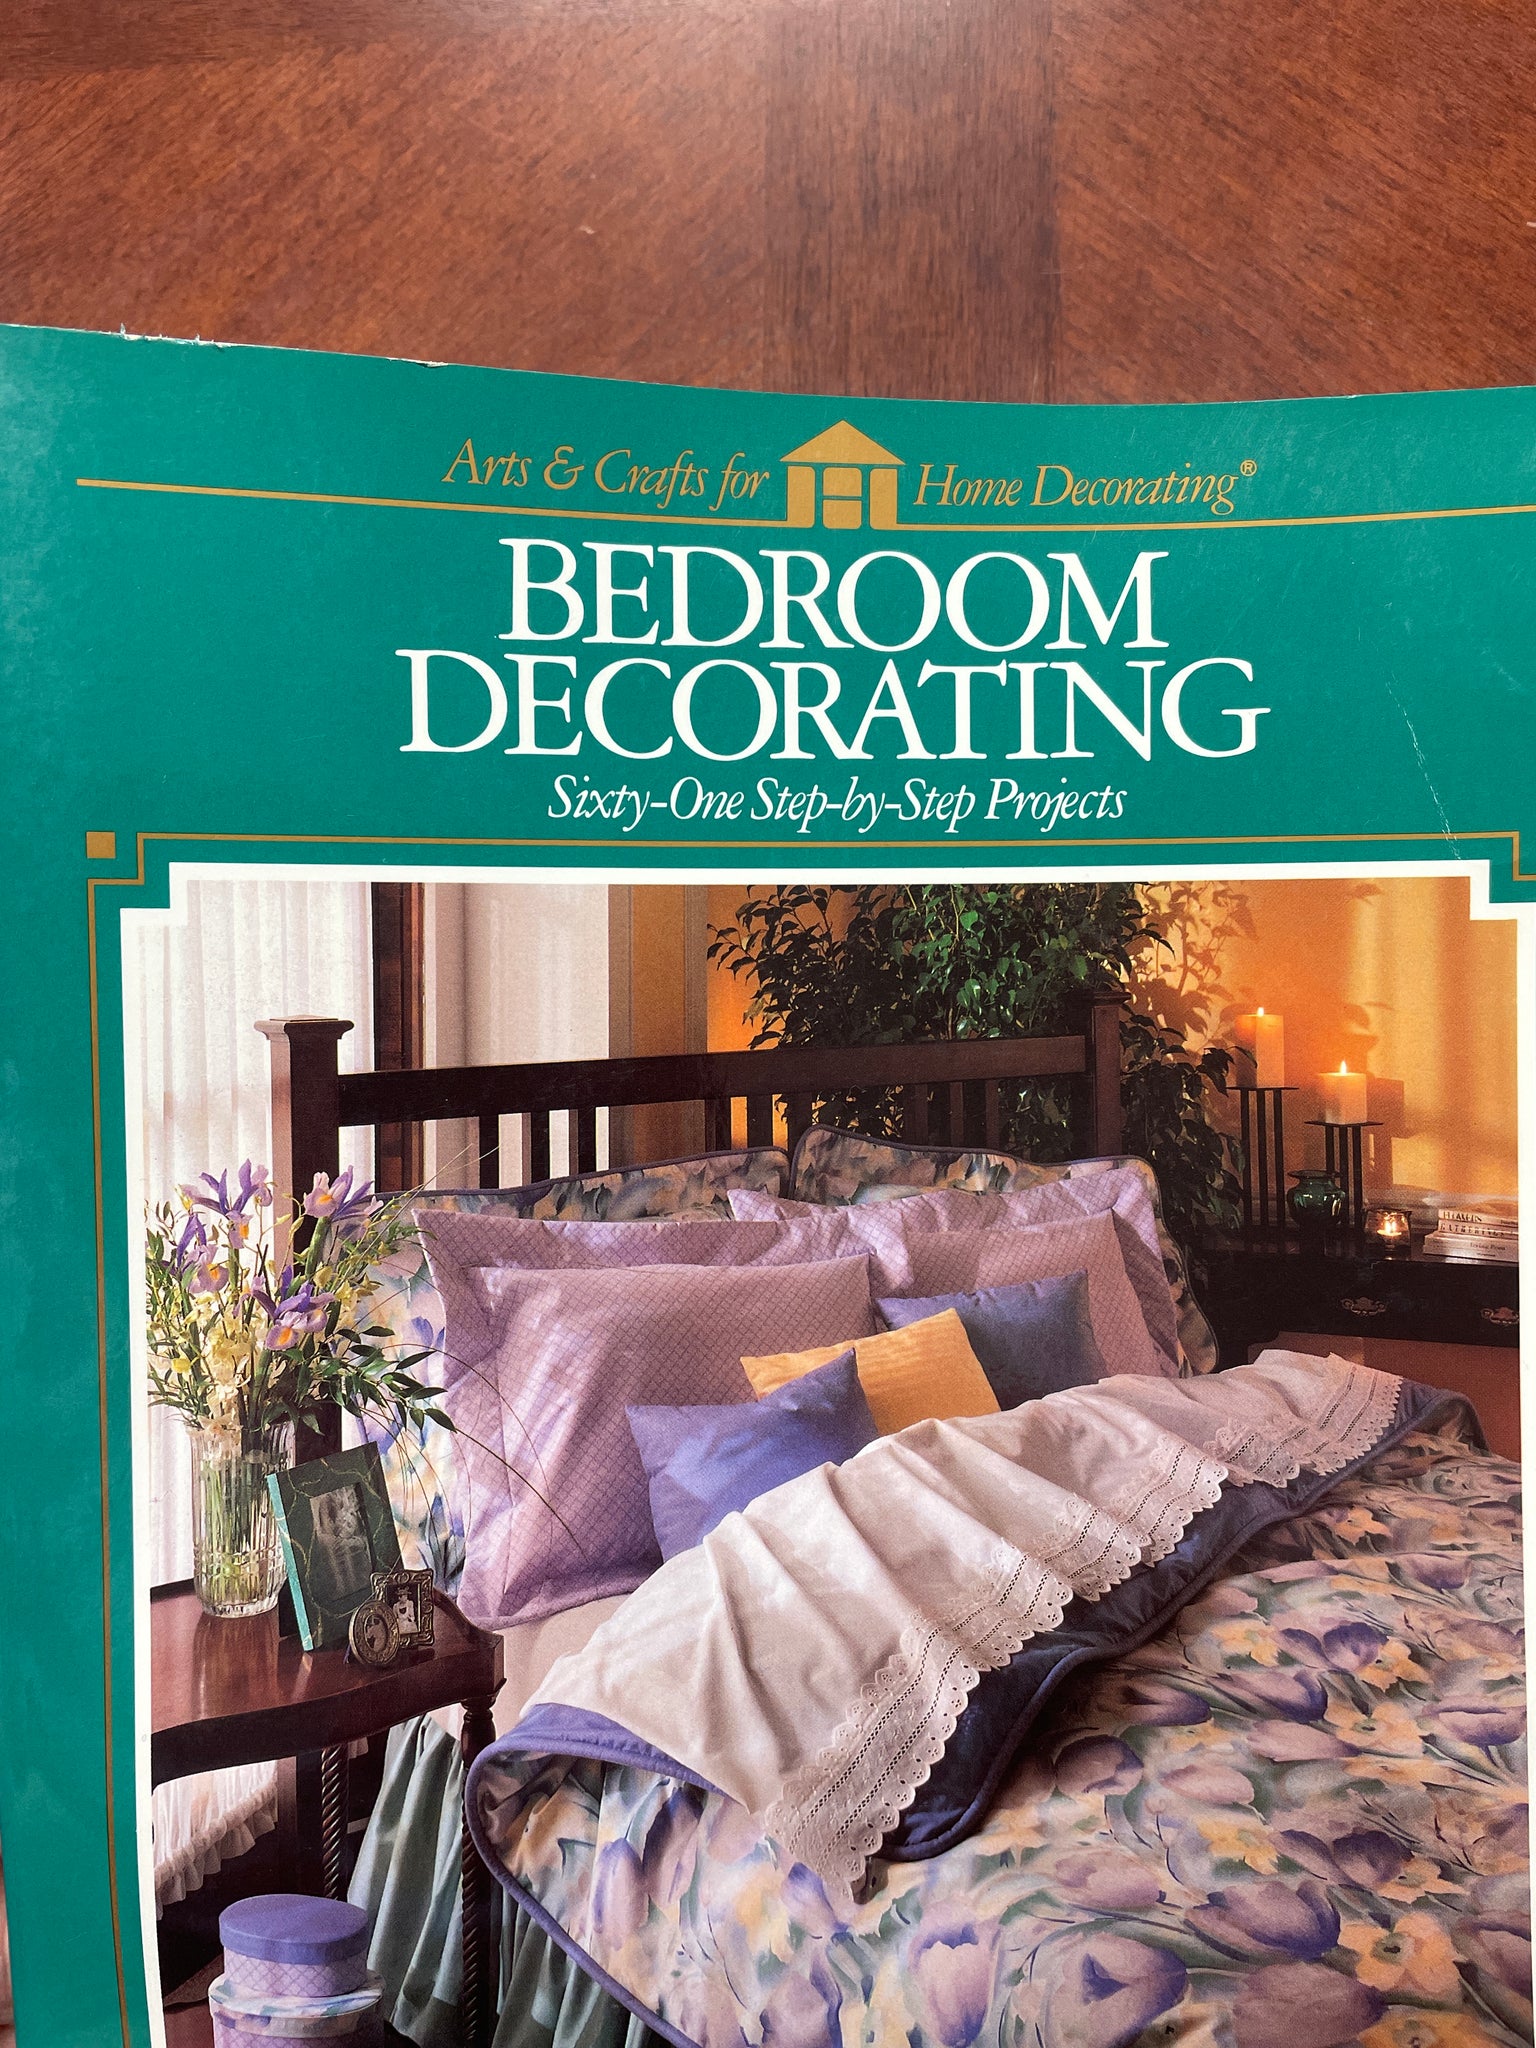 1991 Decorating Book - "Bedroom Decorating"